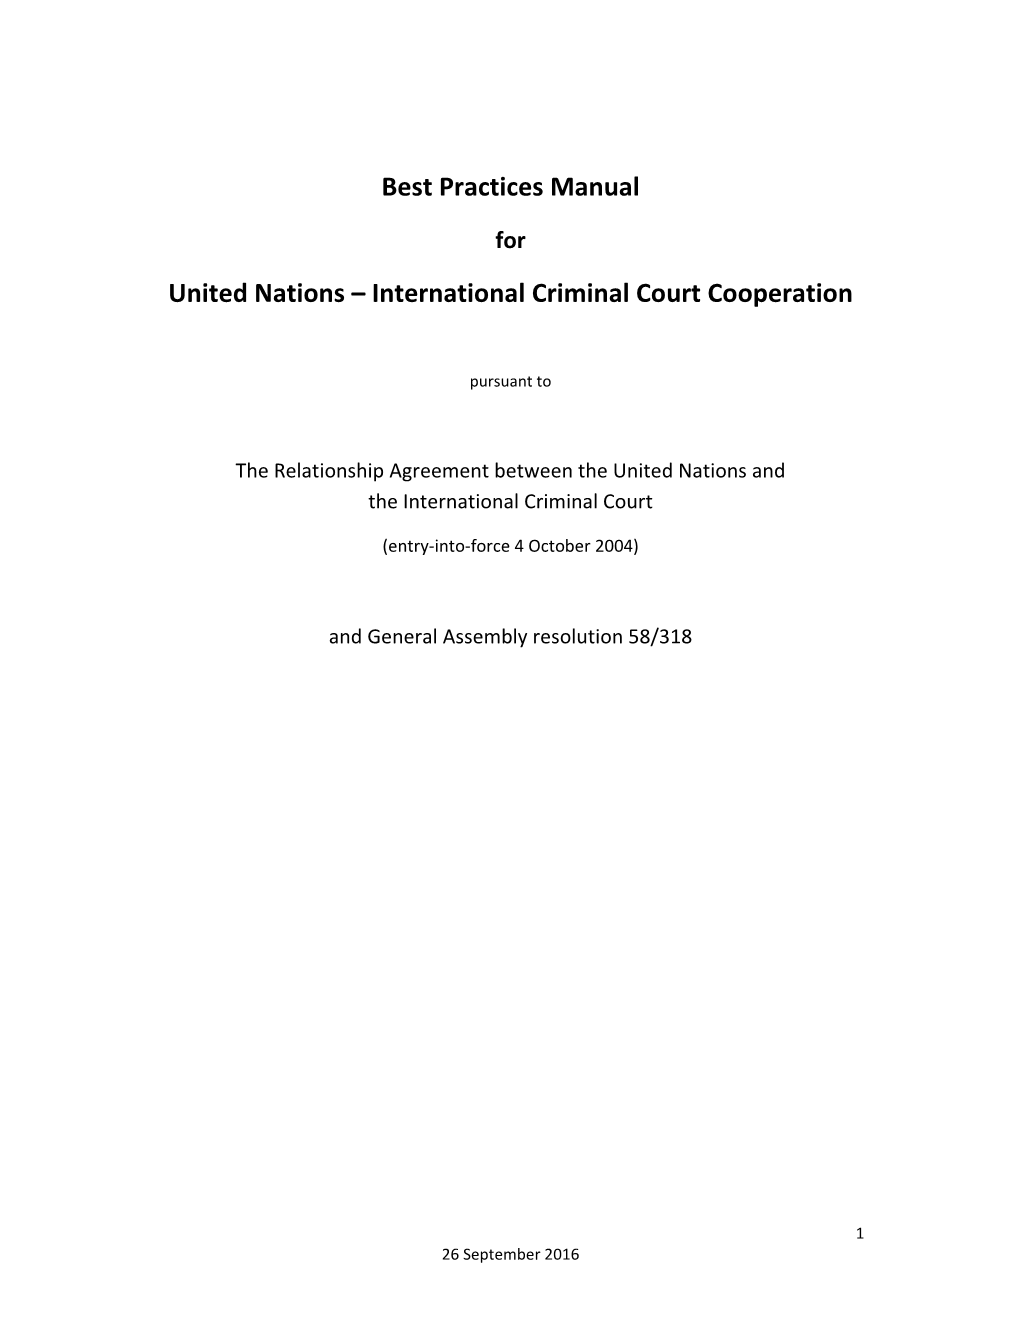 Best Practices Manual United Nations – International Criminal Court